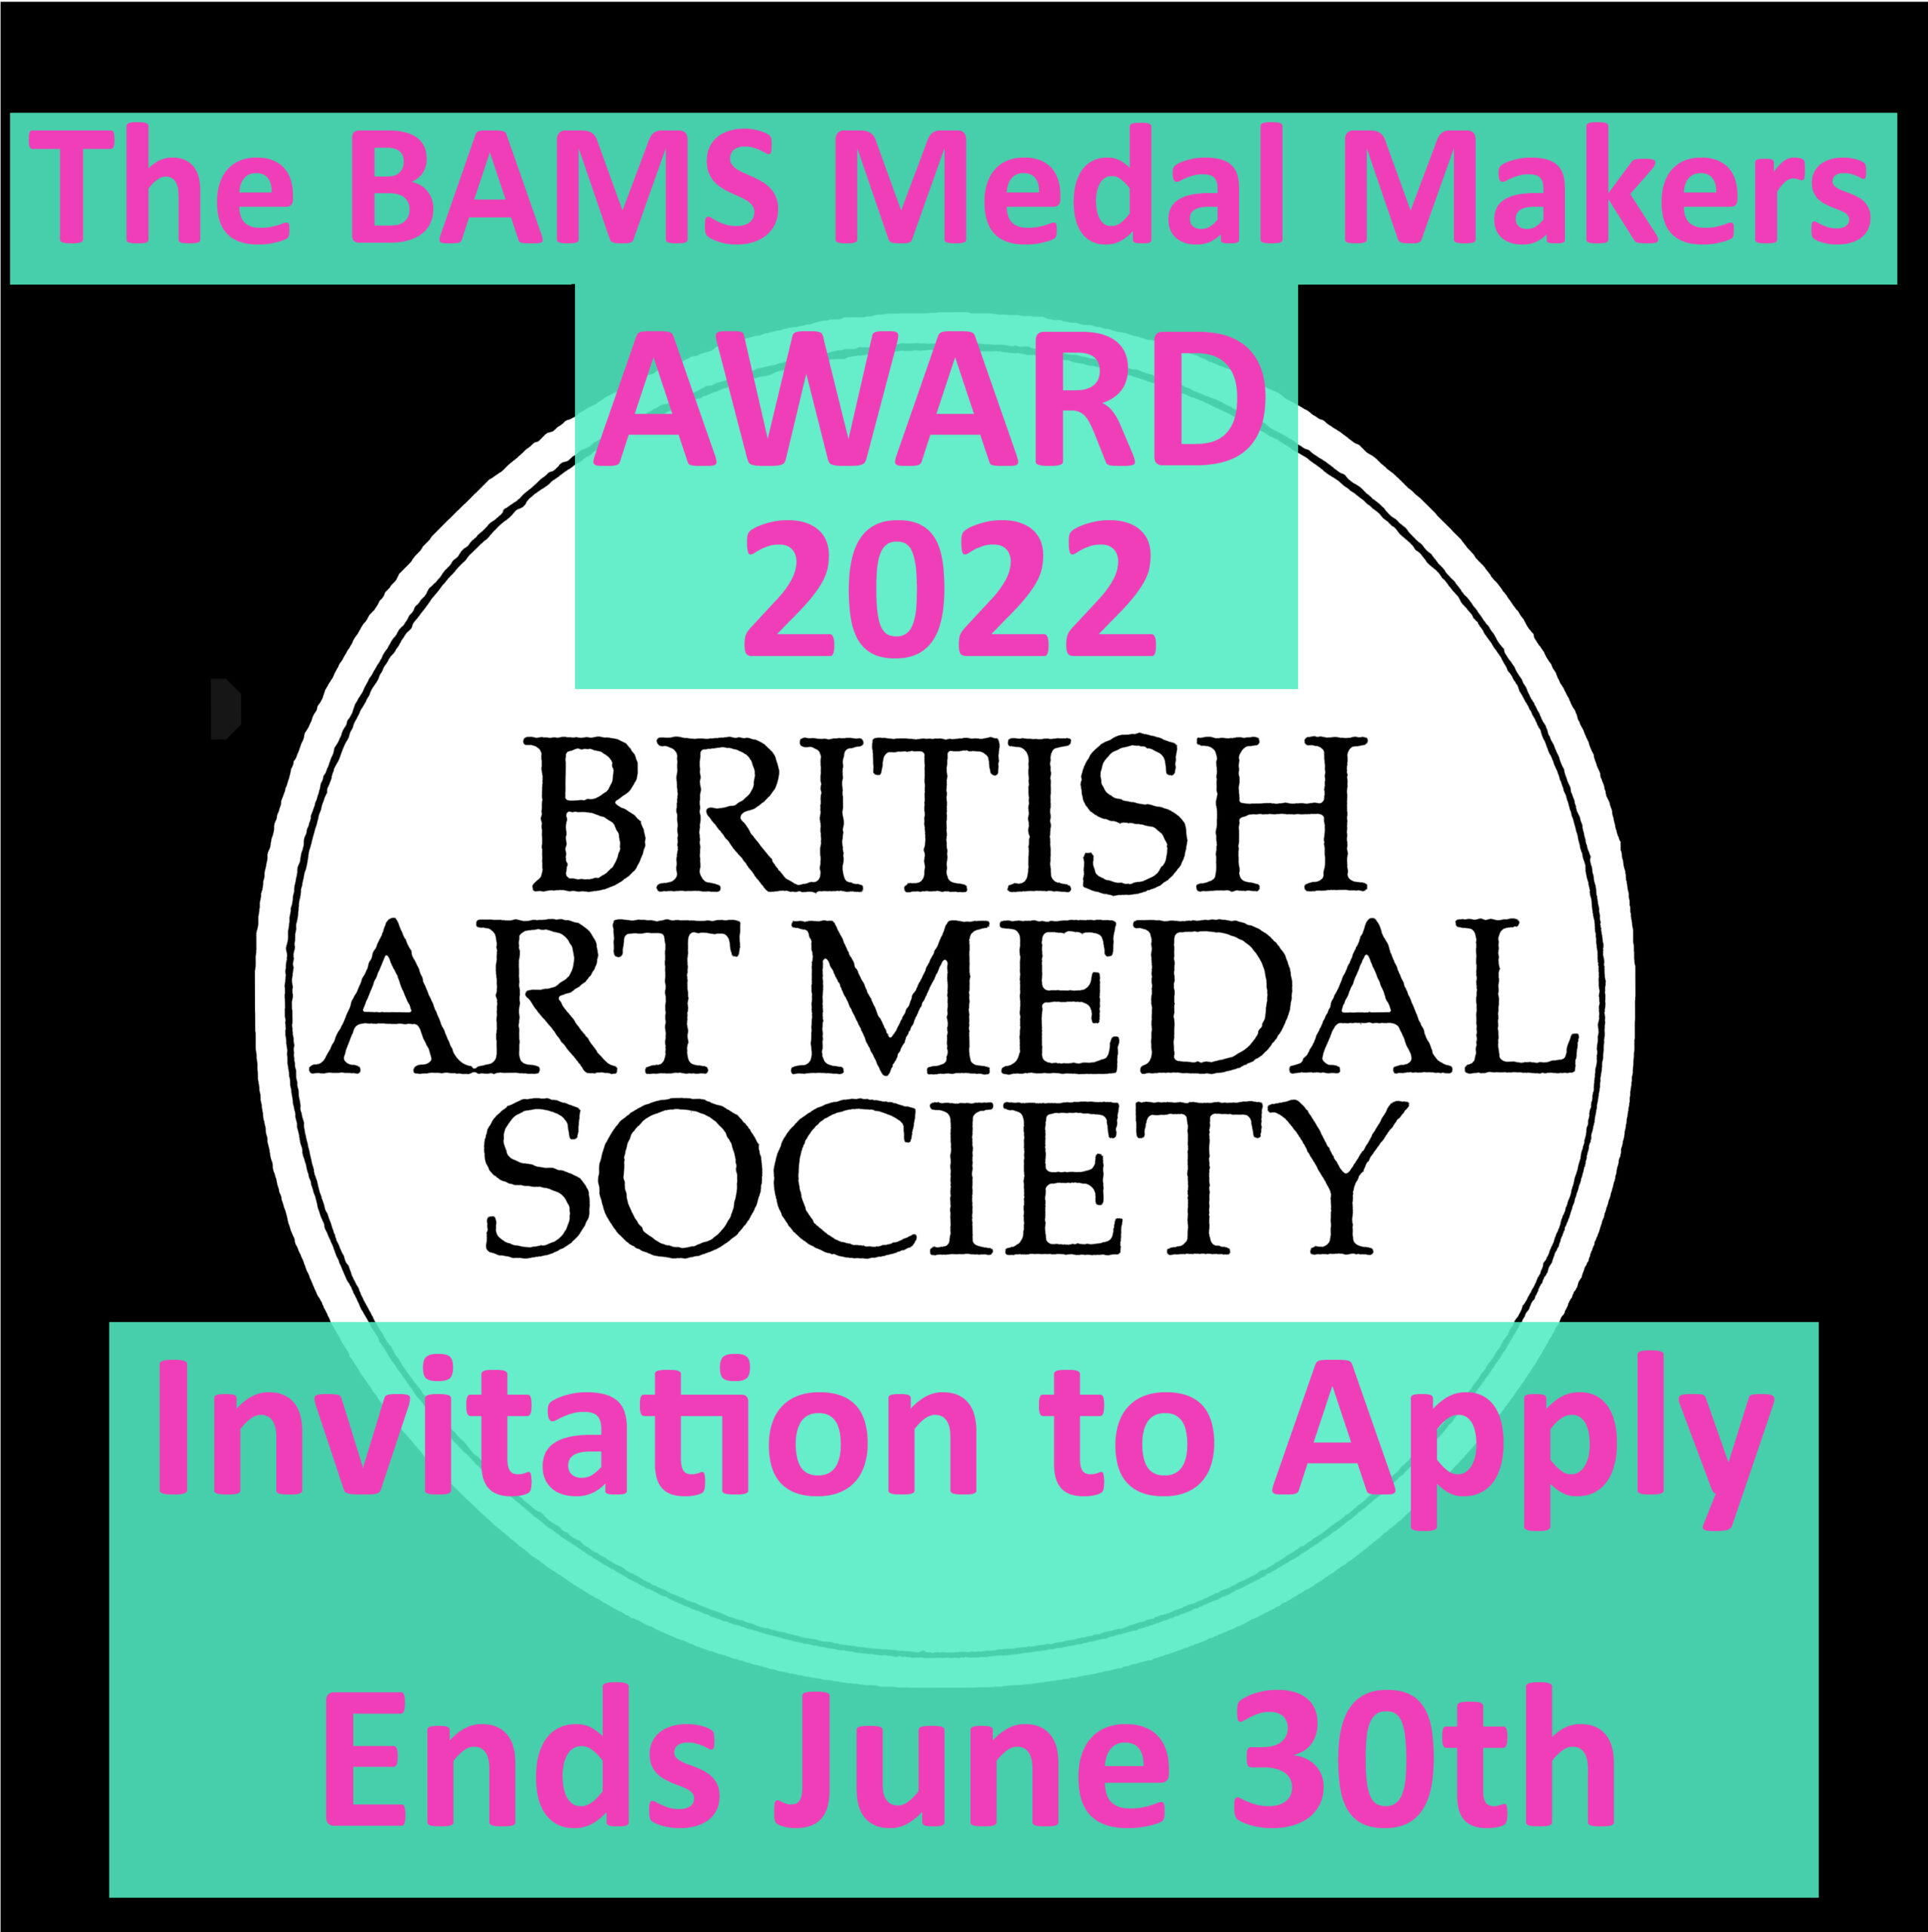 The Bams Medal Makers Award